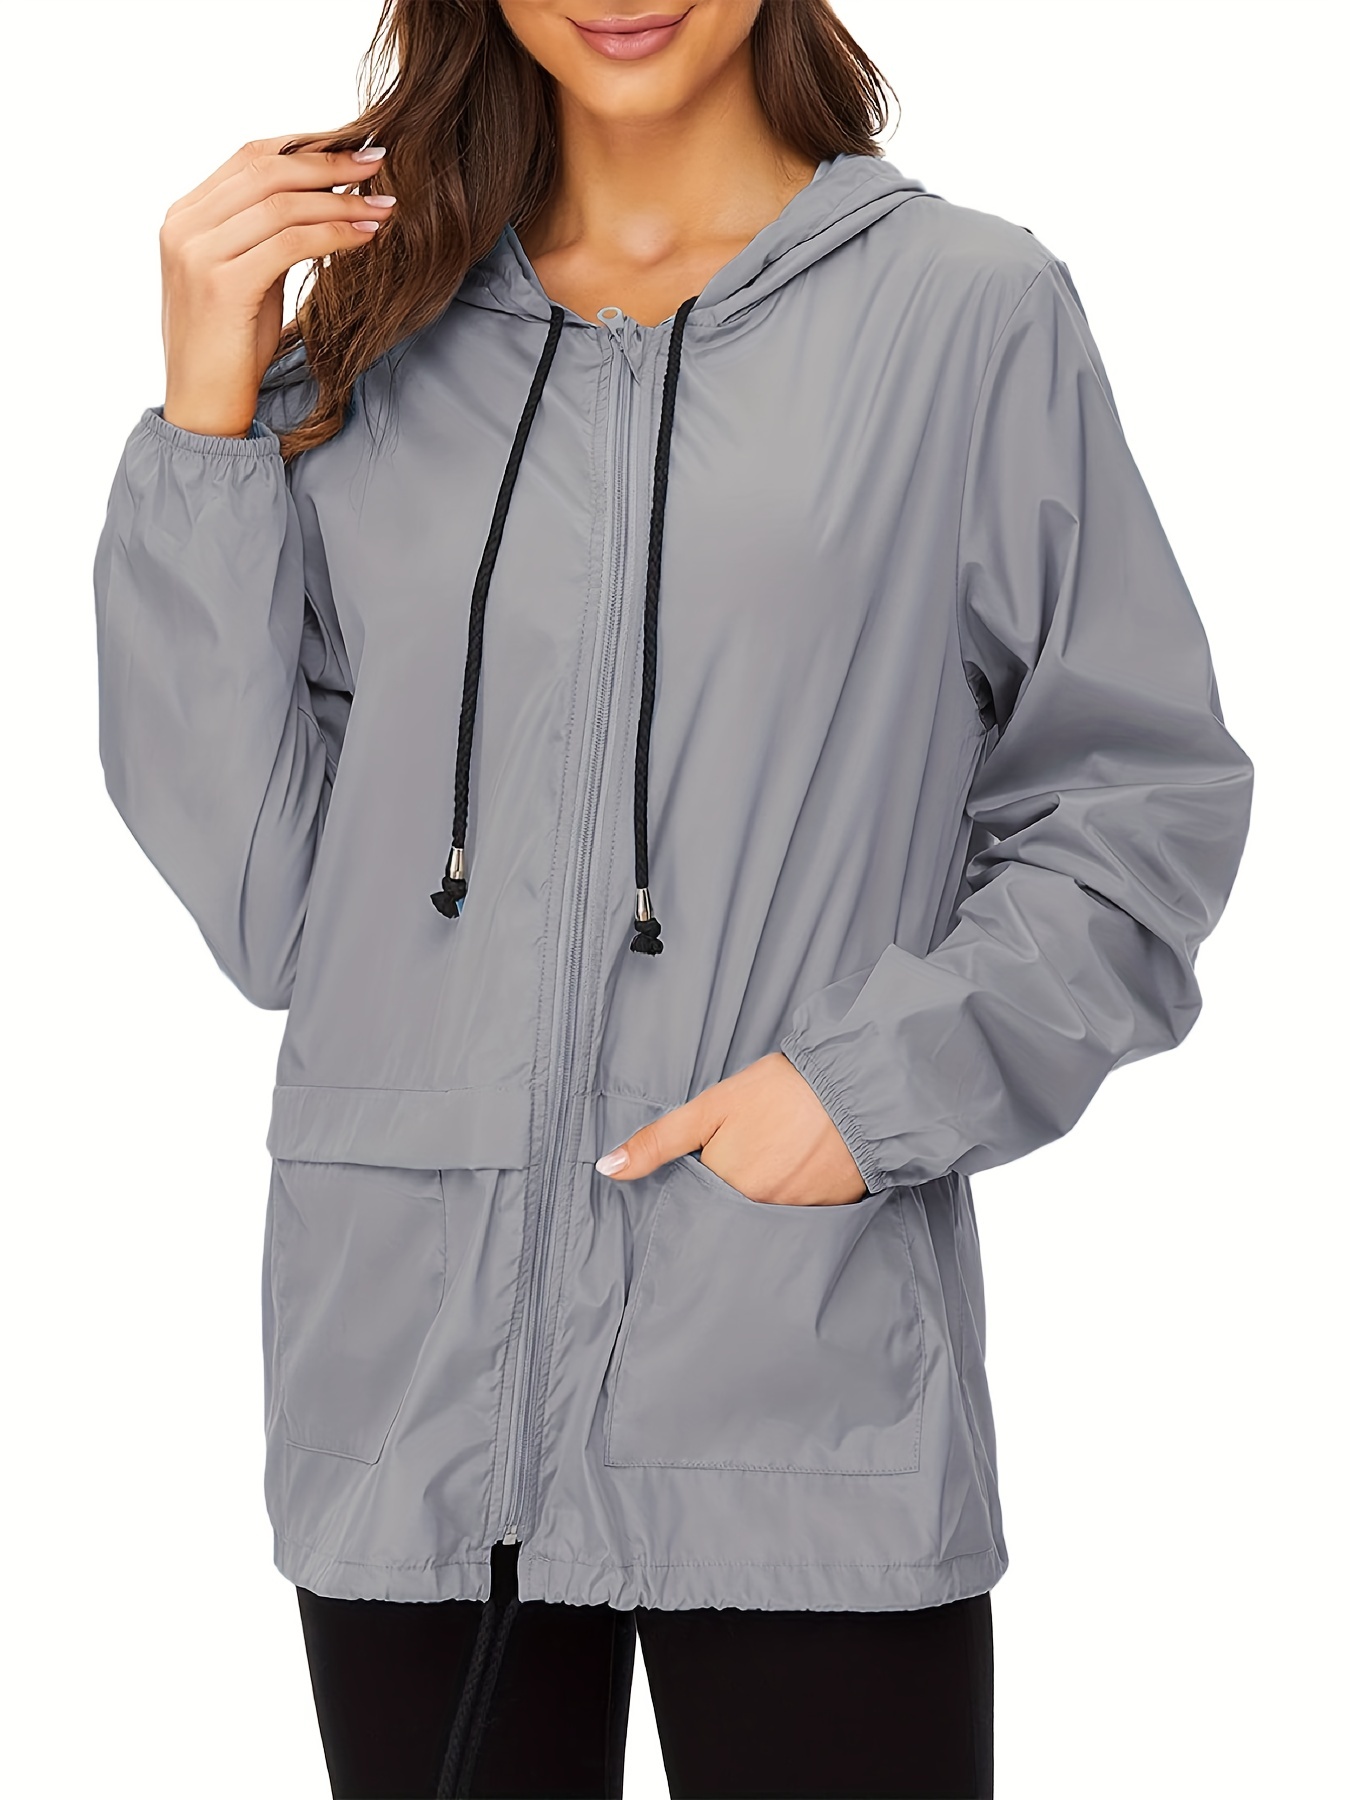 Women's Packable Rain Jacket